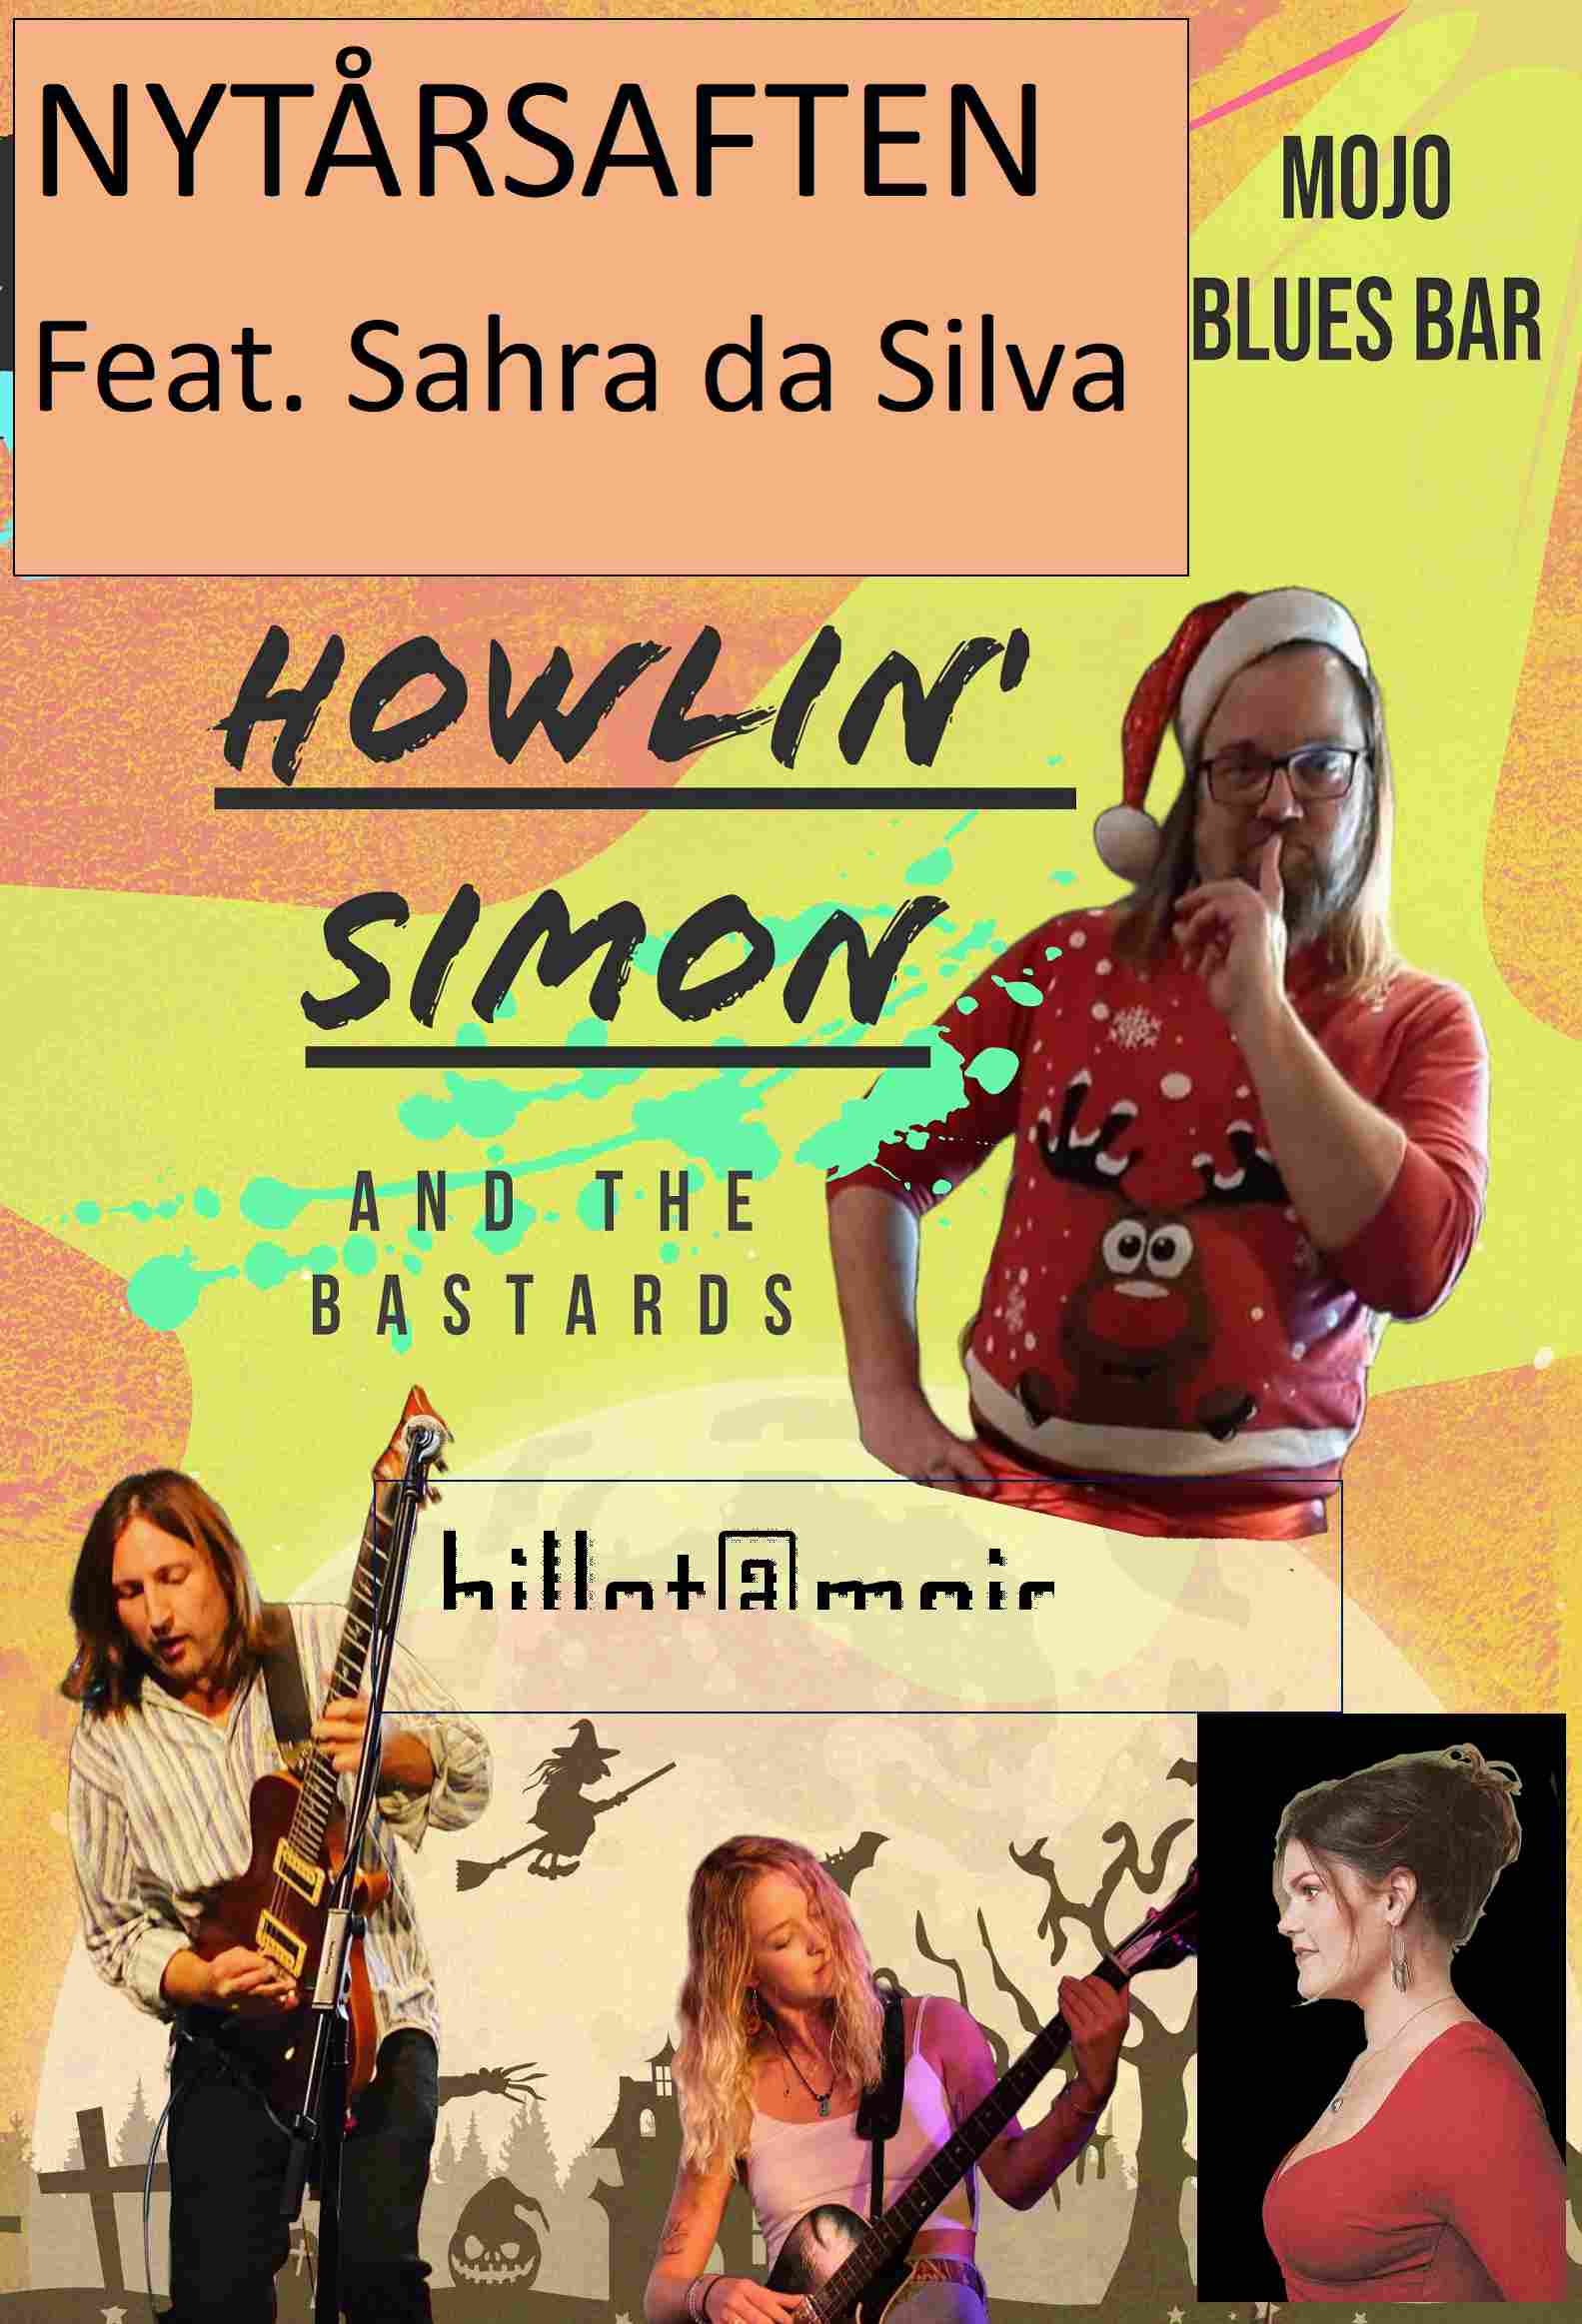 NYTÅRSAFTEN 
Howlin Simon & the Bastards
Feat. Sahra da Silva